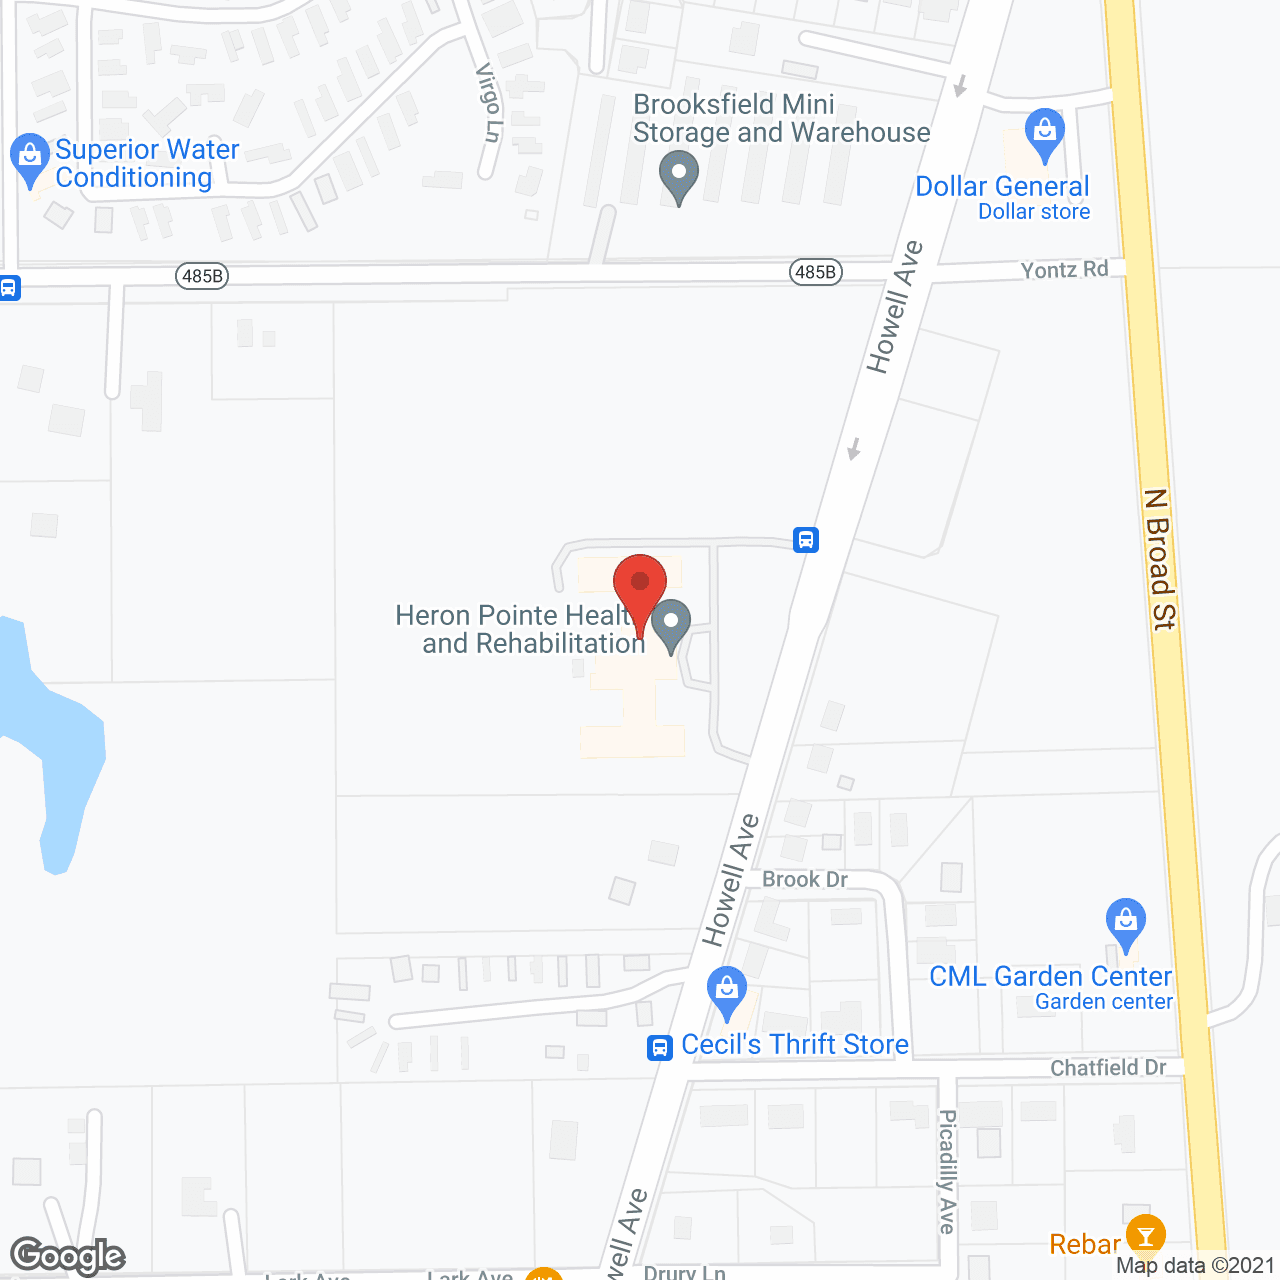 Eastbrooke Health Care Ctr in google map